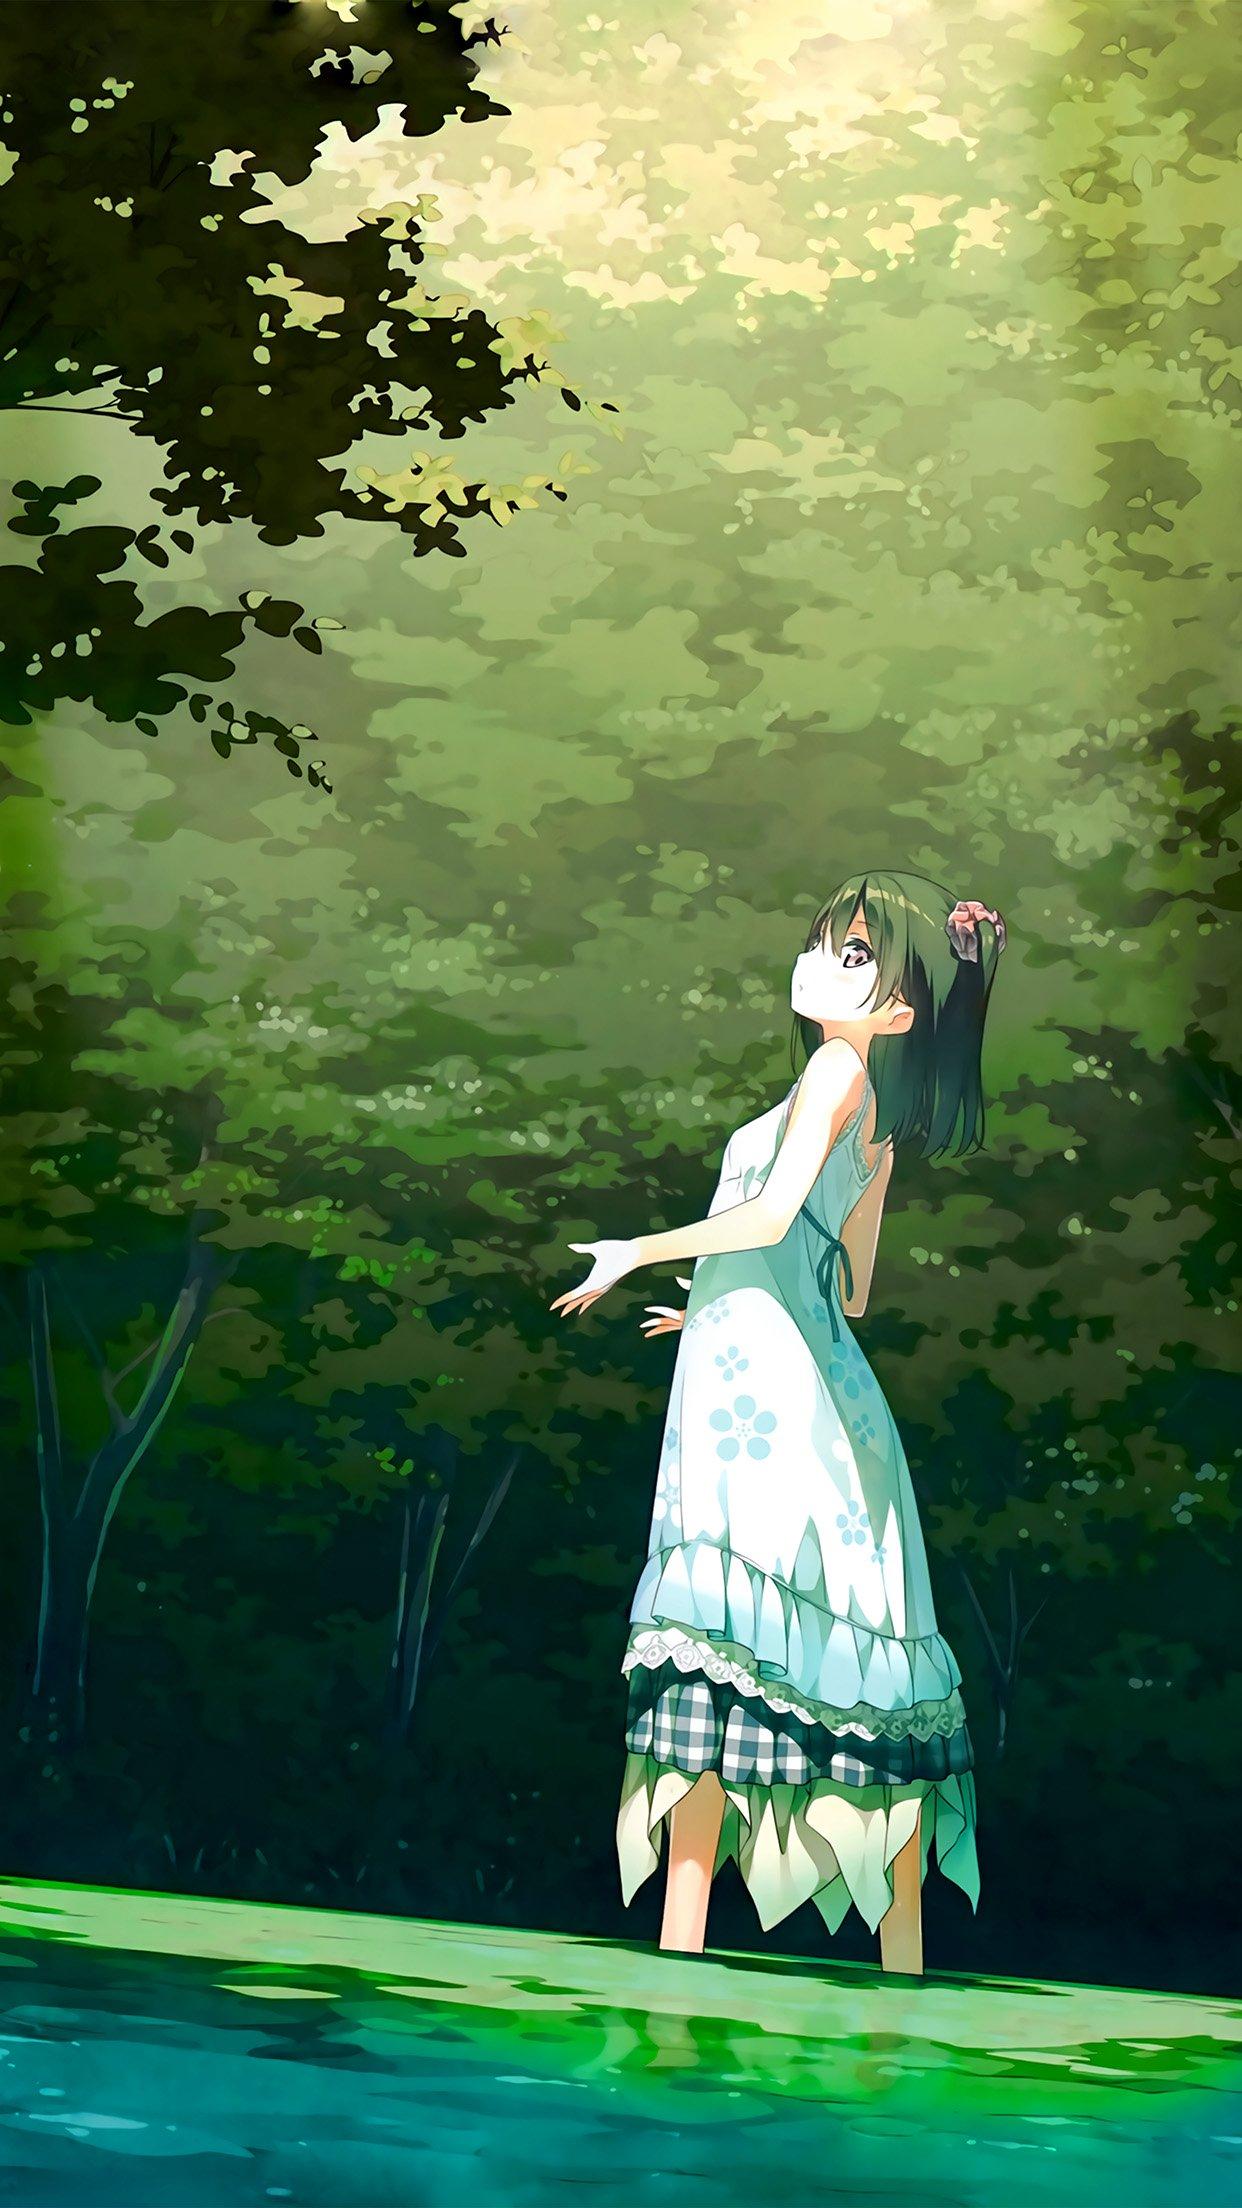 iPhone wallpaper. anime girl green